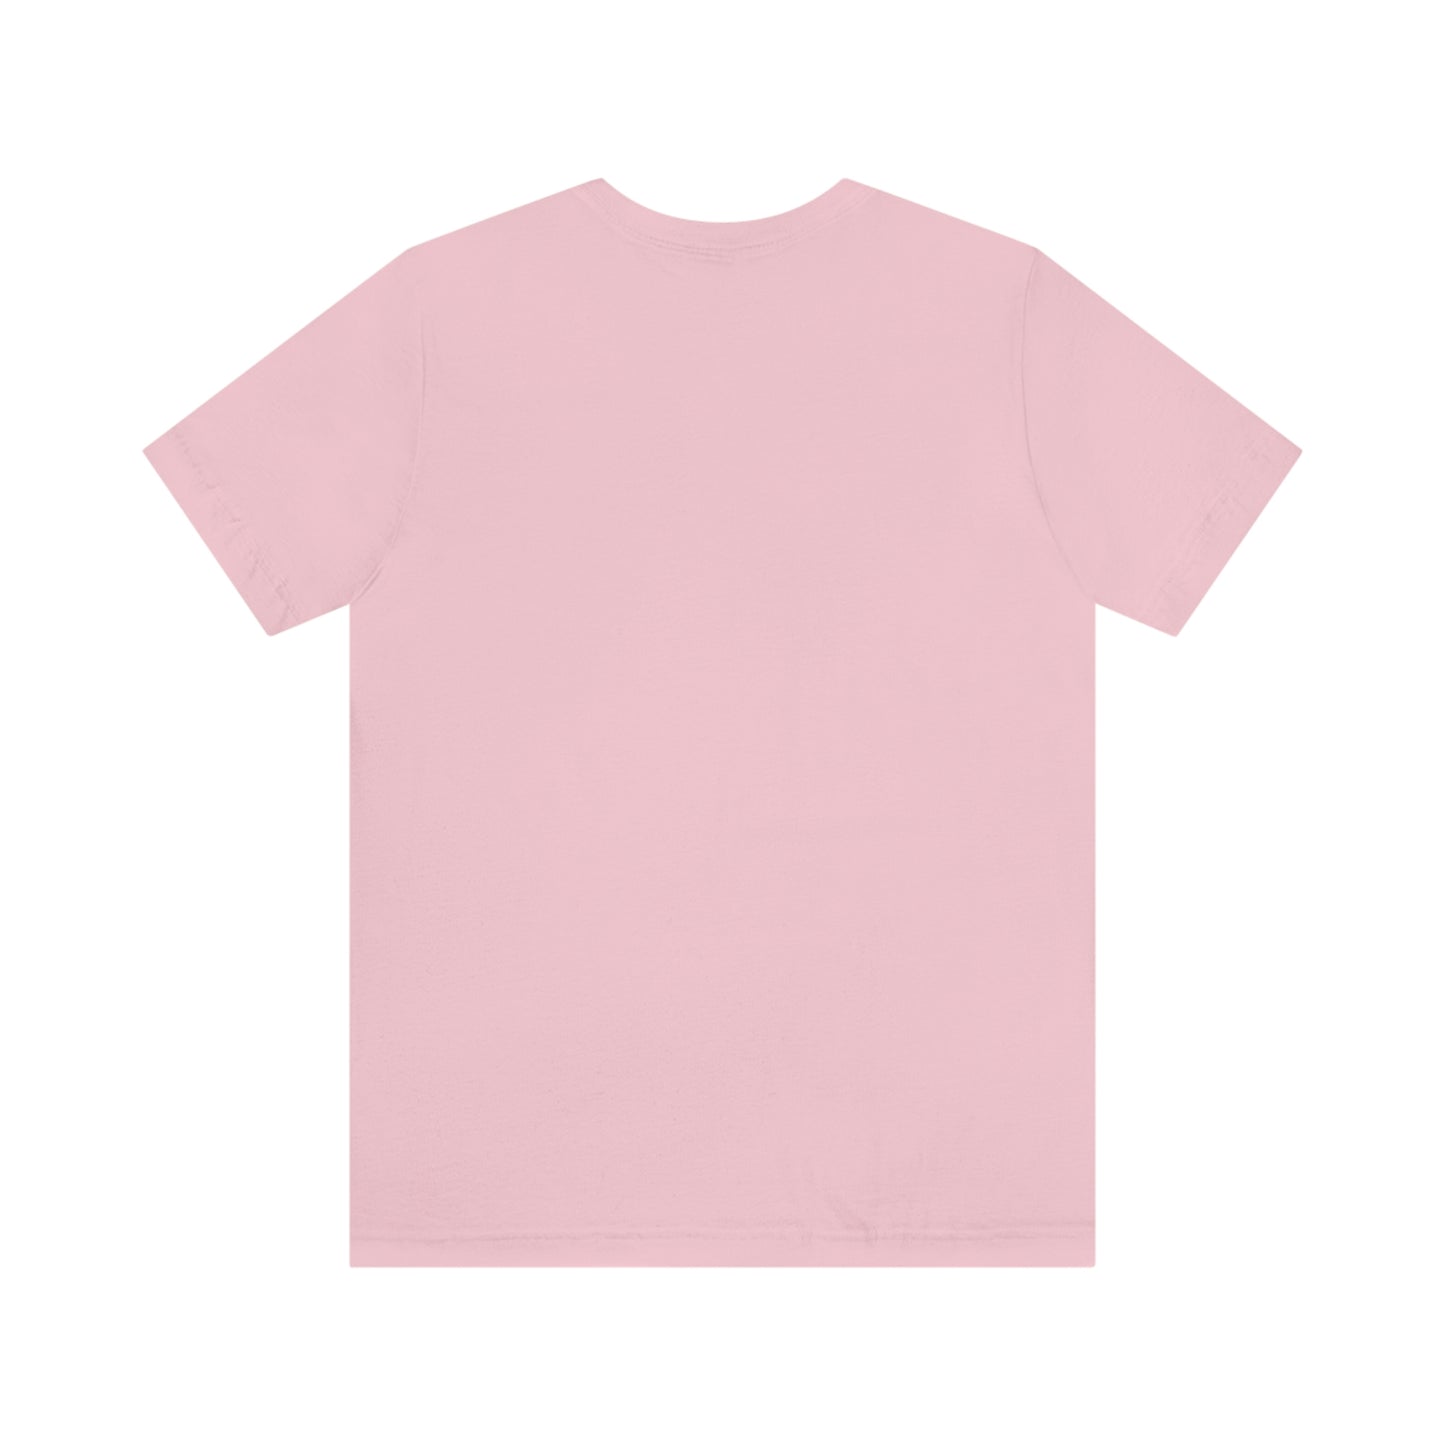 Maniac Team Shirt Pink